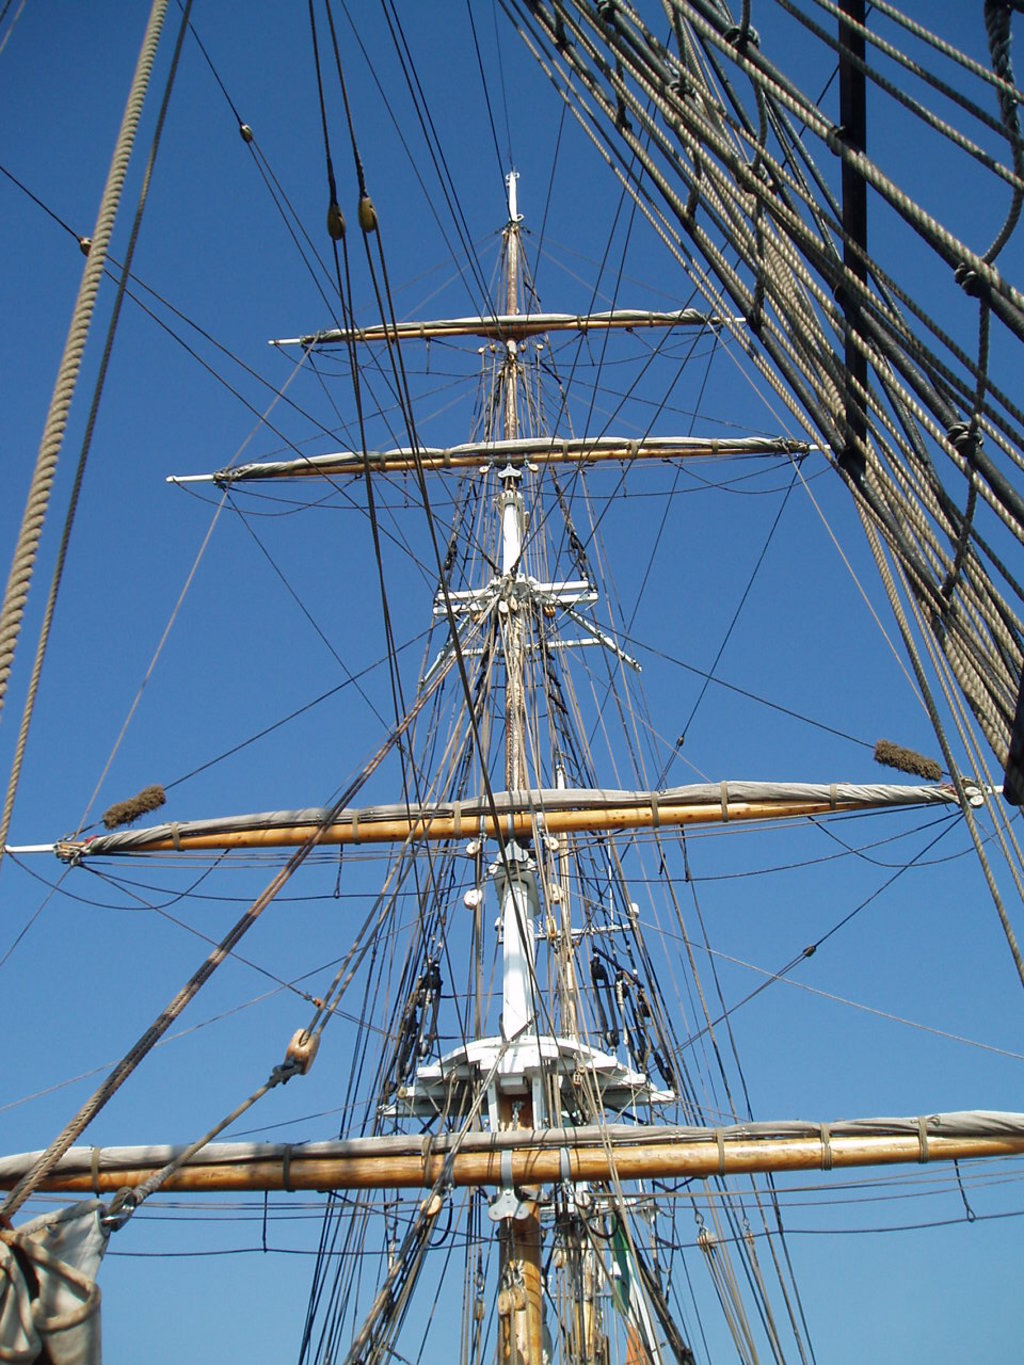 The main mast of the Jeanie Johnston.